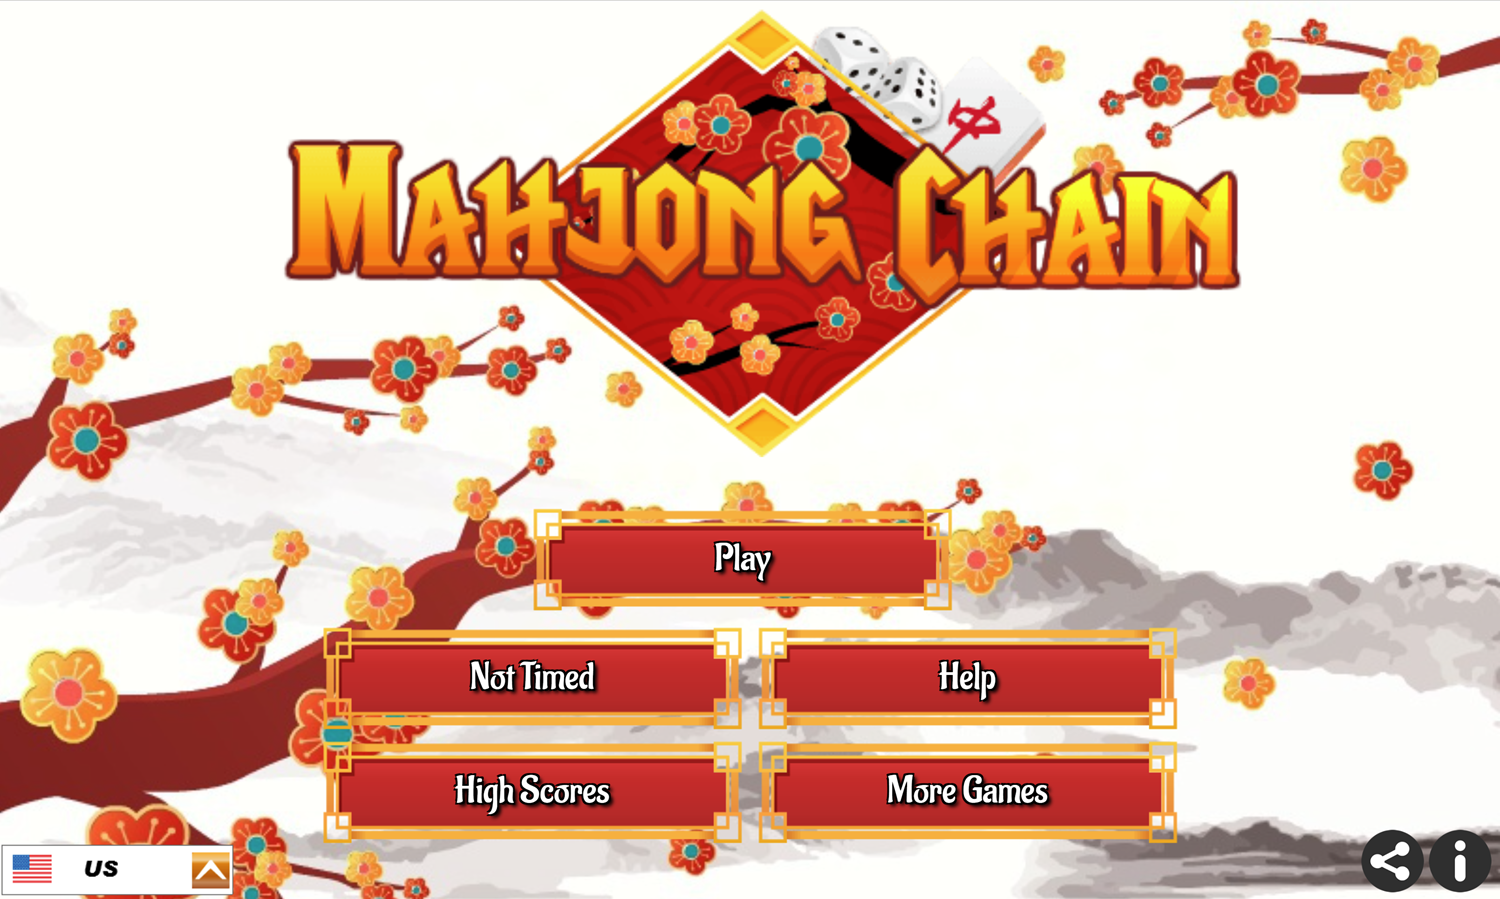 Mahjong Chain Game Welcome Screen Screenshot.